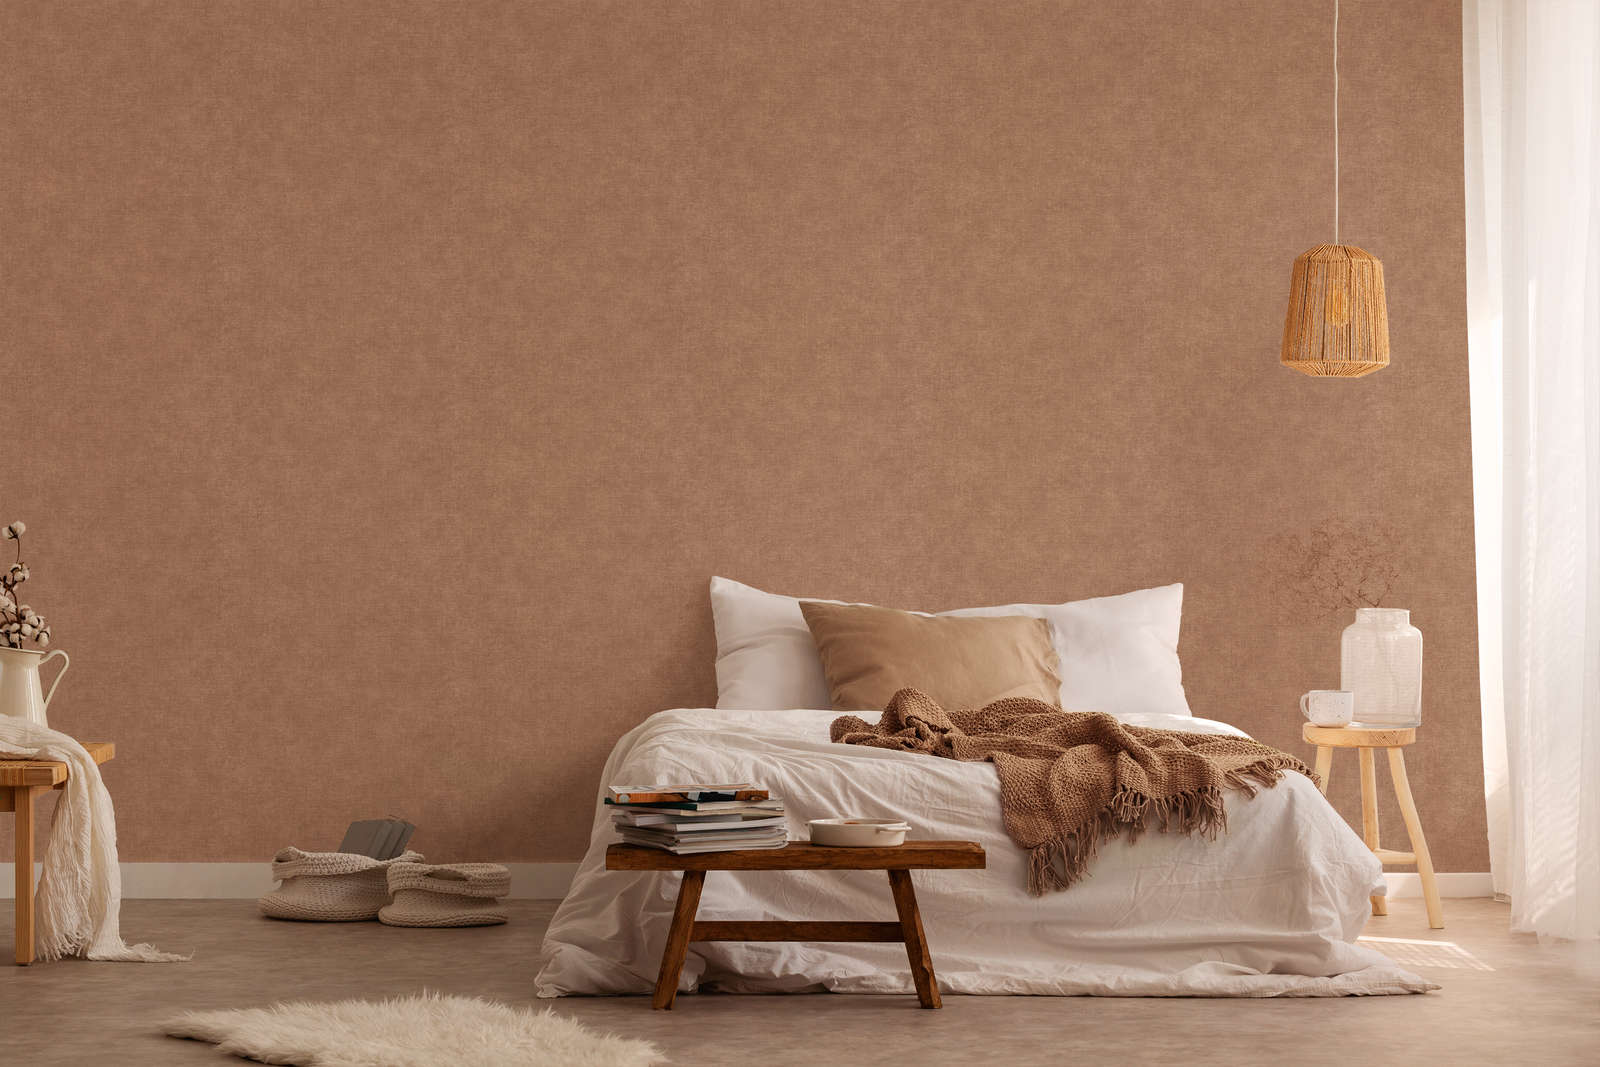             Non-woven wallpaper in plaster look, single-coloured - brown, orange
        